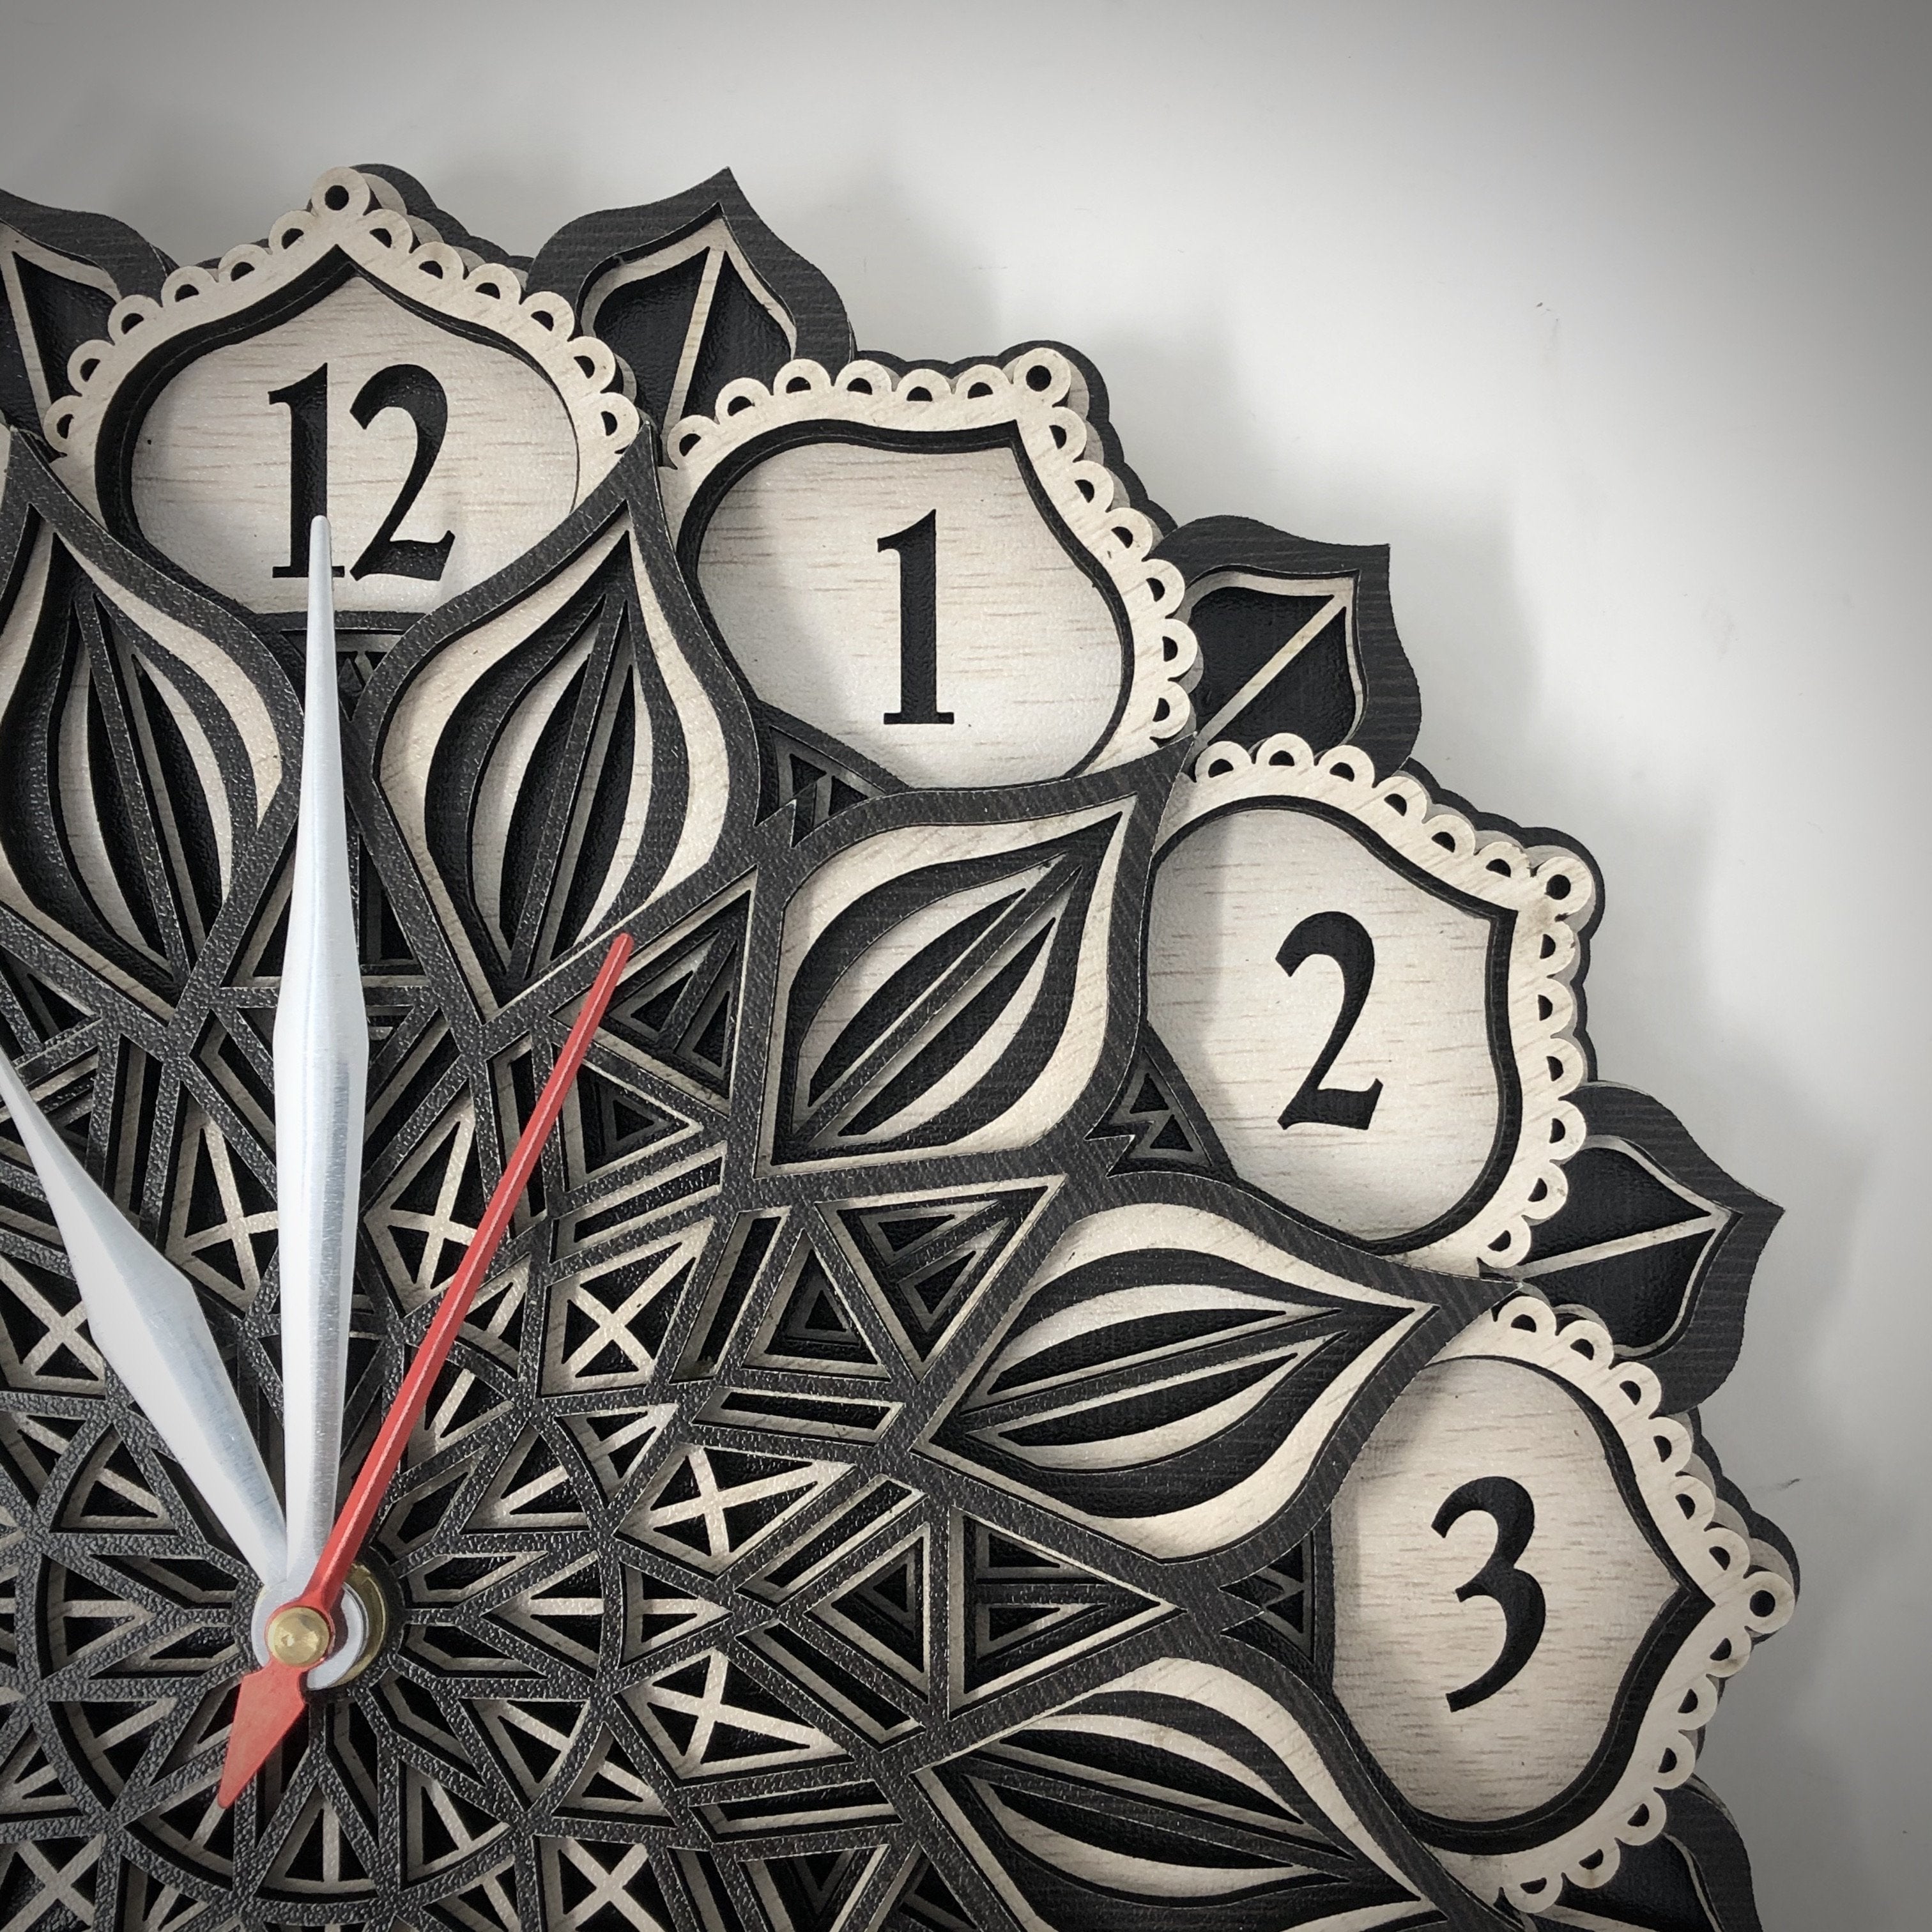 Impressive 3D Multilayered Mandala Wall Clock